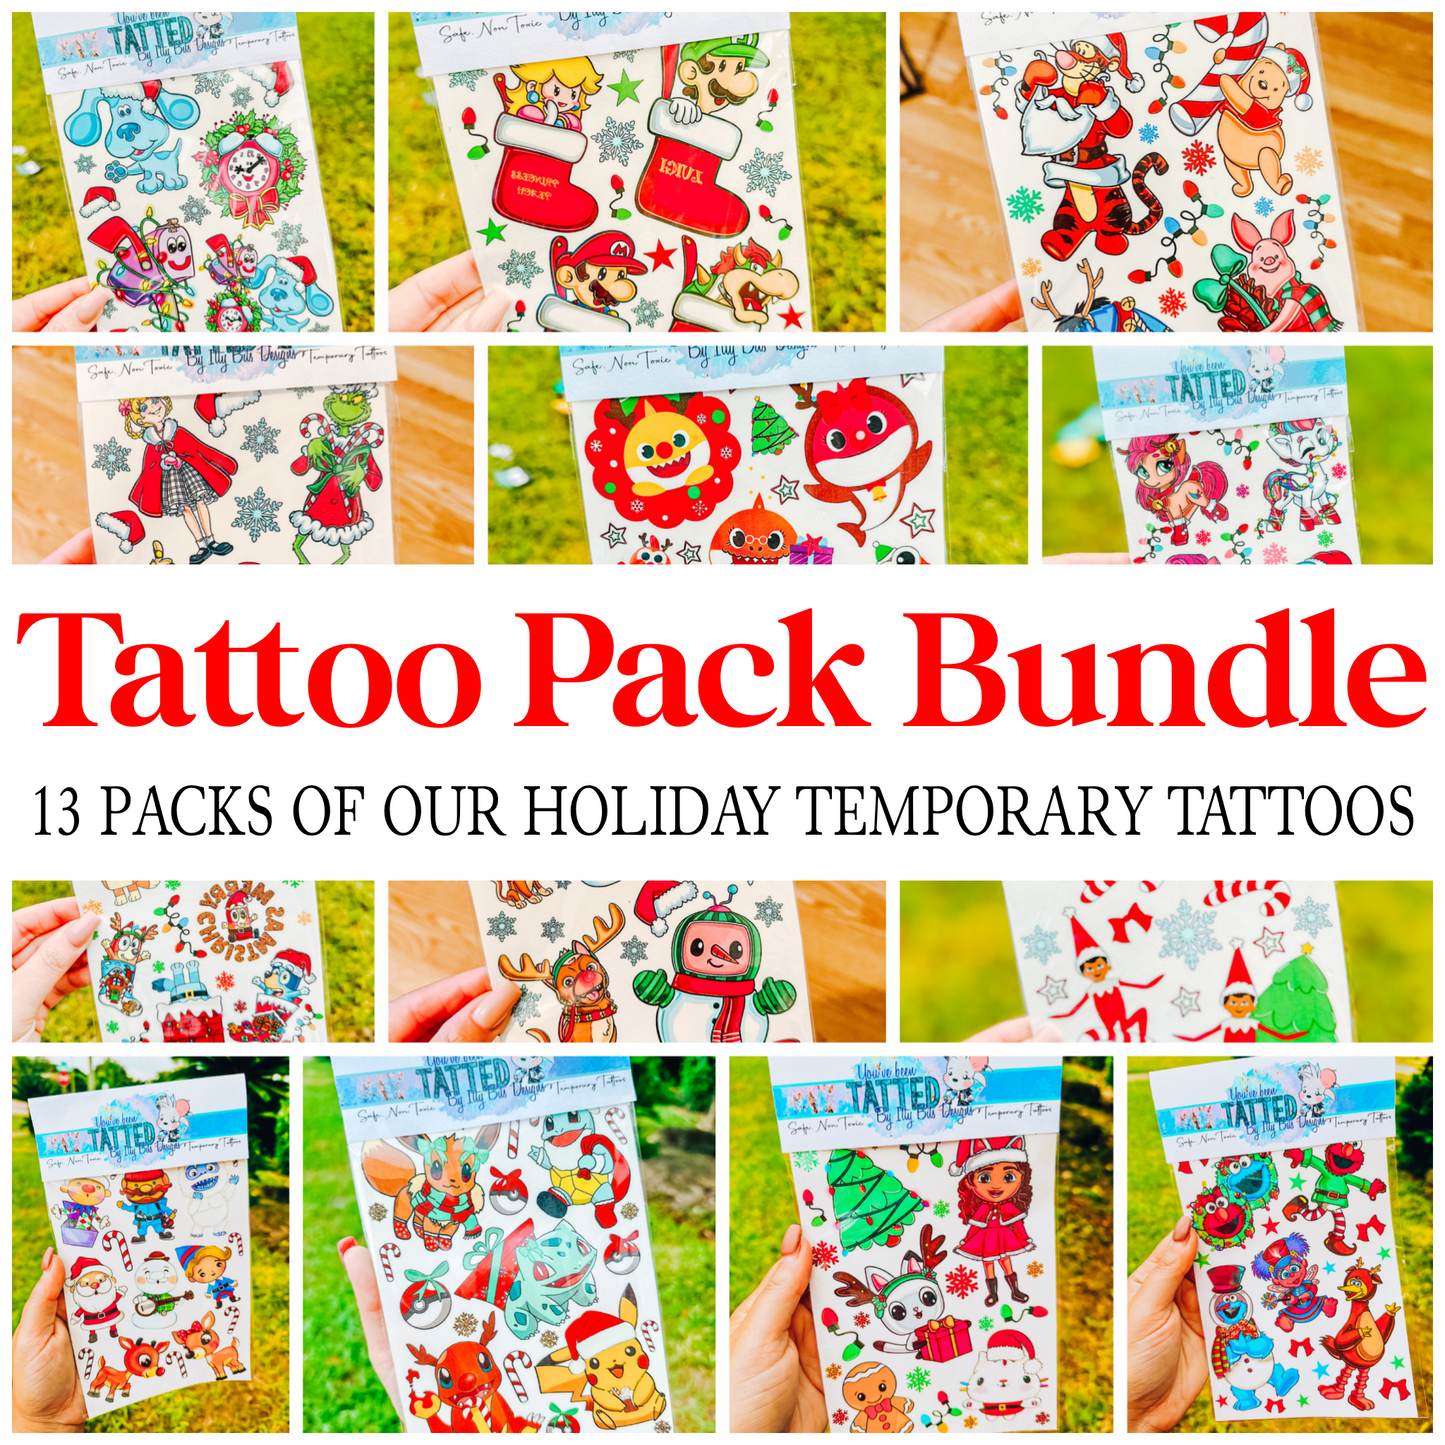 Christmas Tattoo Pack BUNDLE (All 13 Packs)